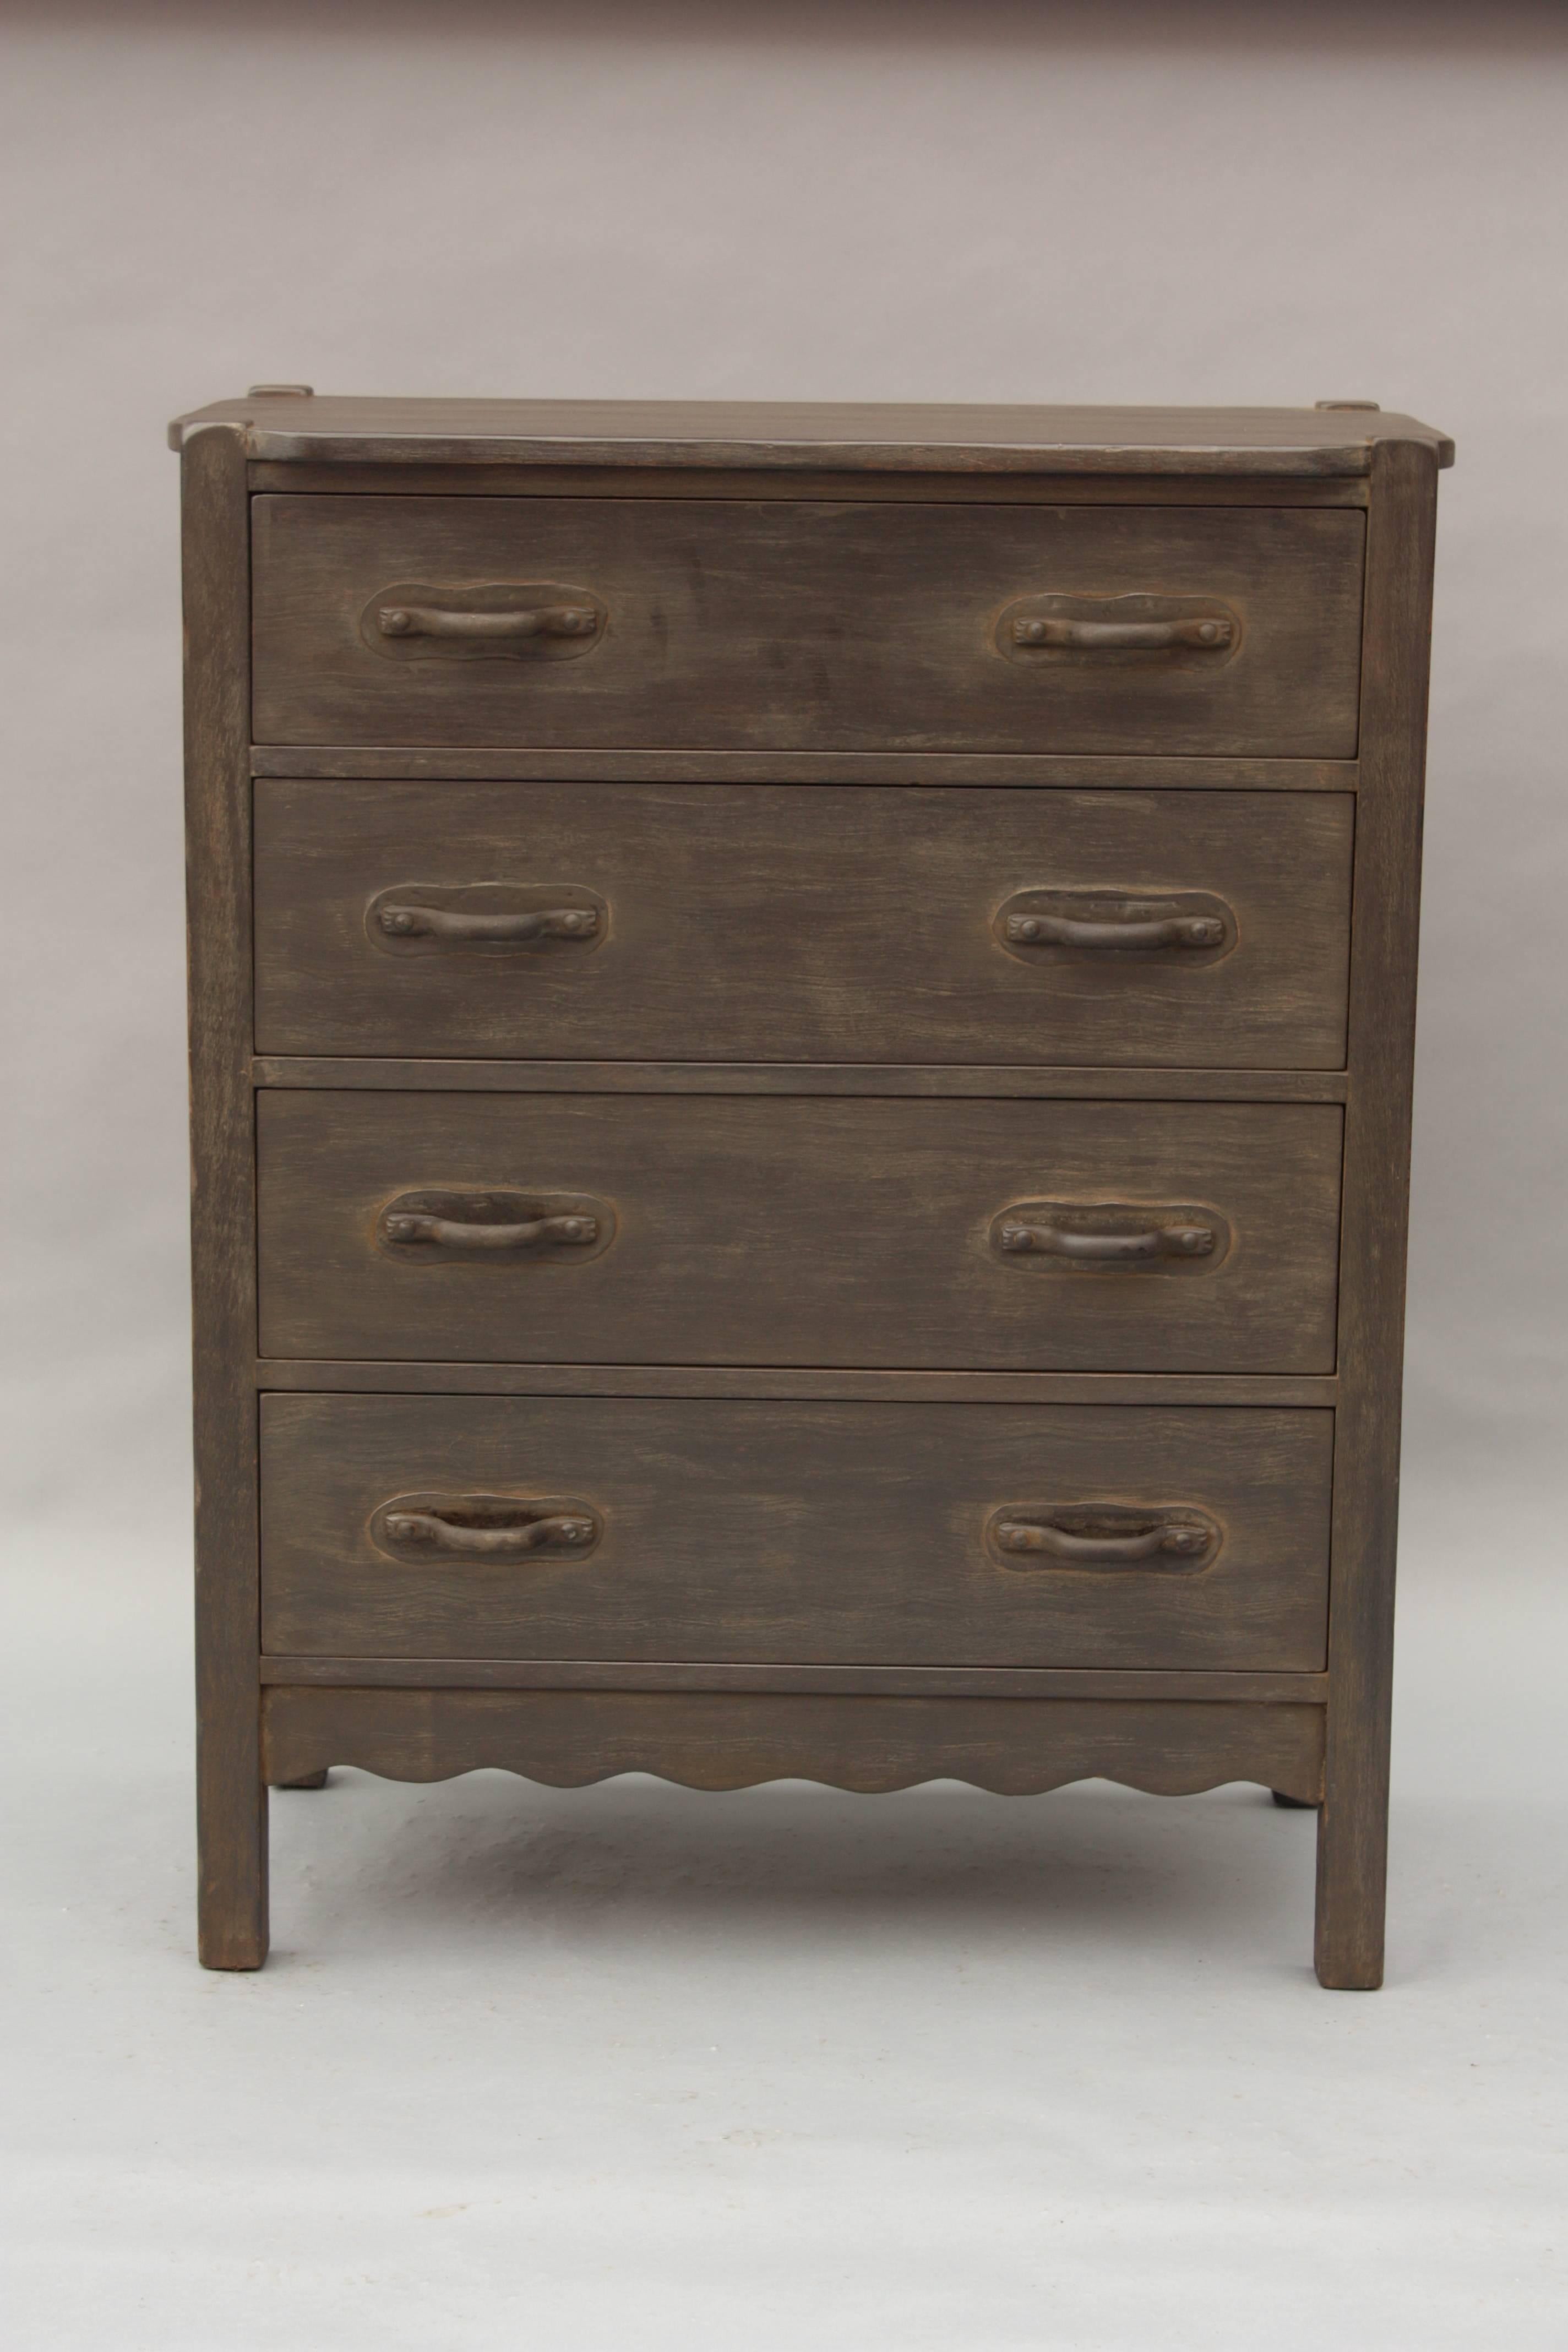 Dresser, circa 1930s. Signed Monterey. New dark finish. Measures: 42.25